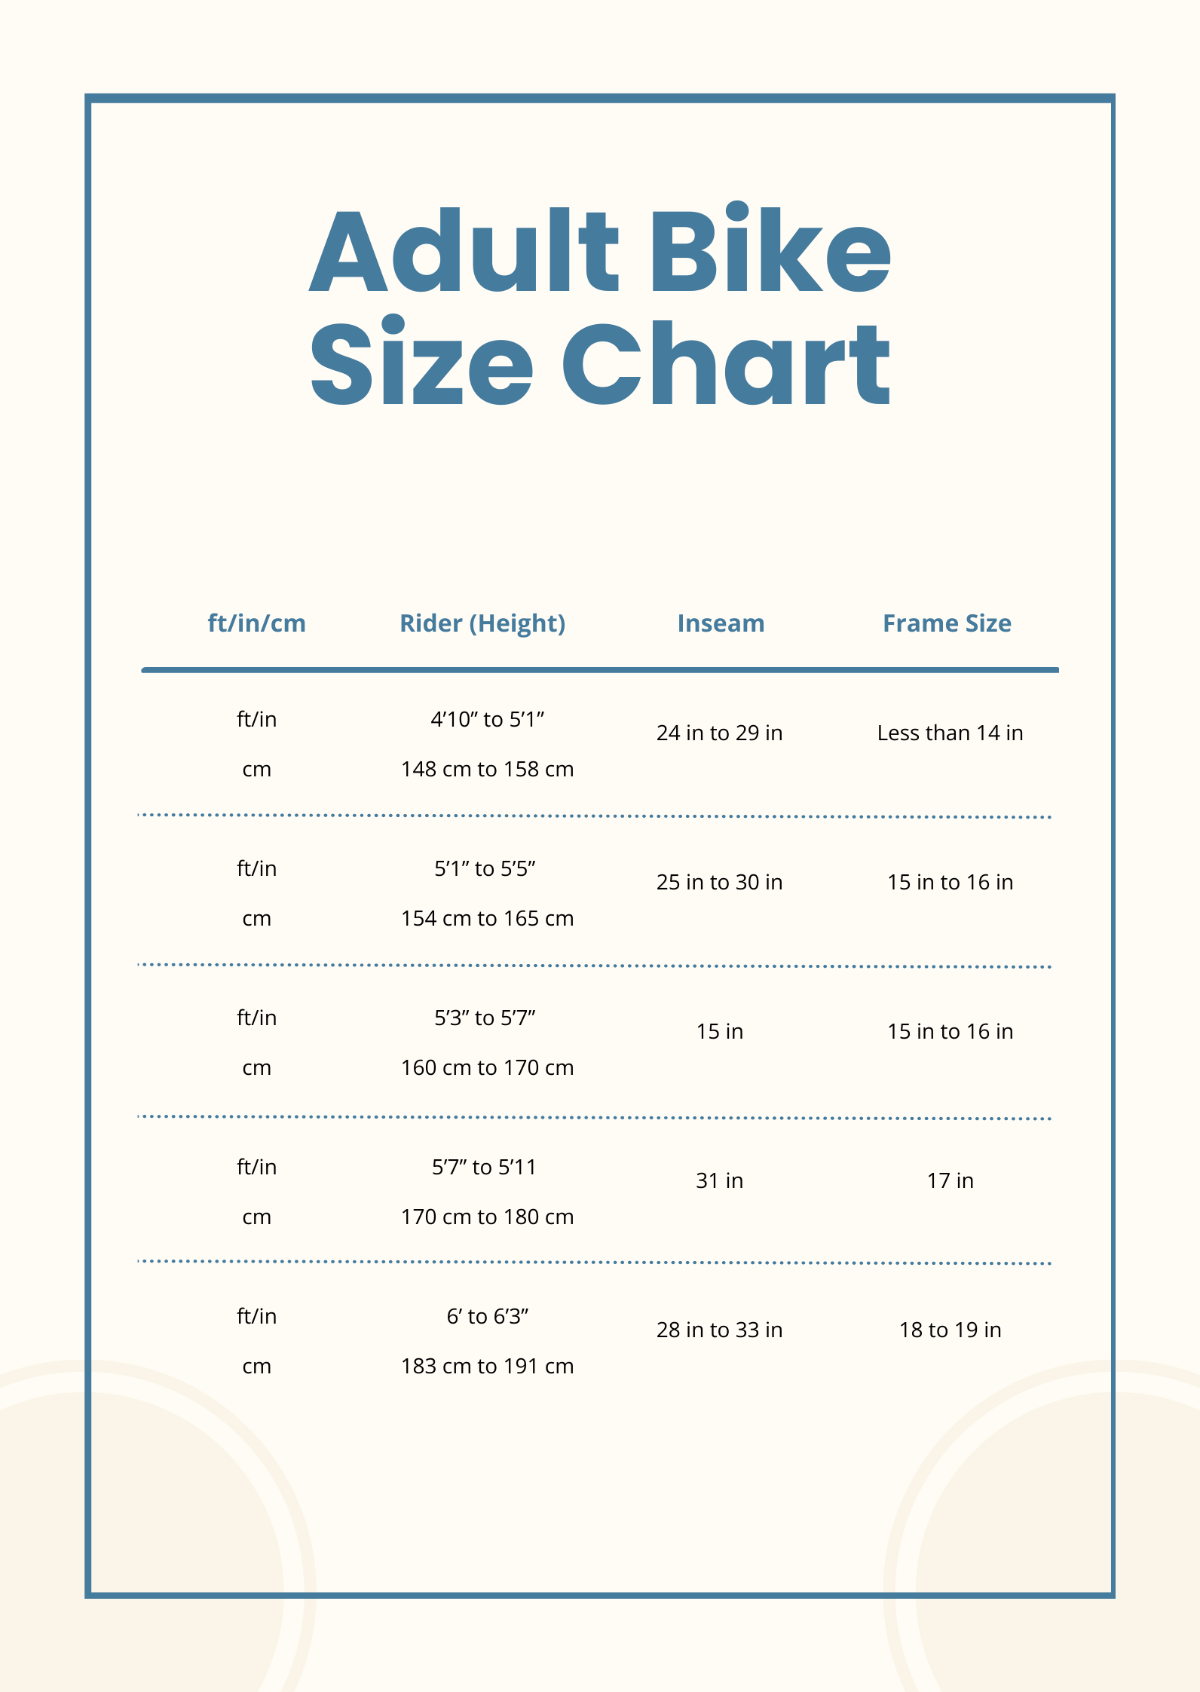 Adult Bike Size Chart Template